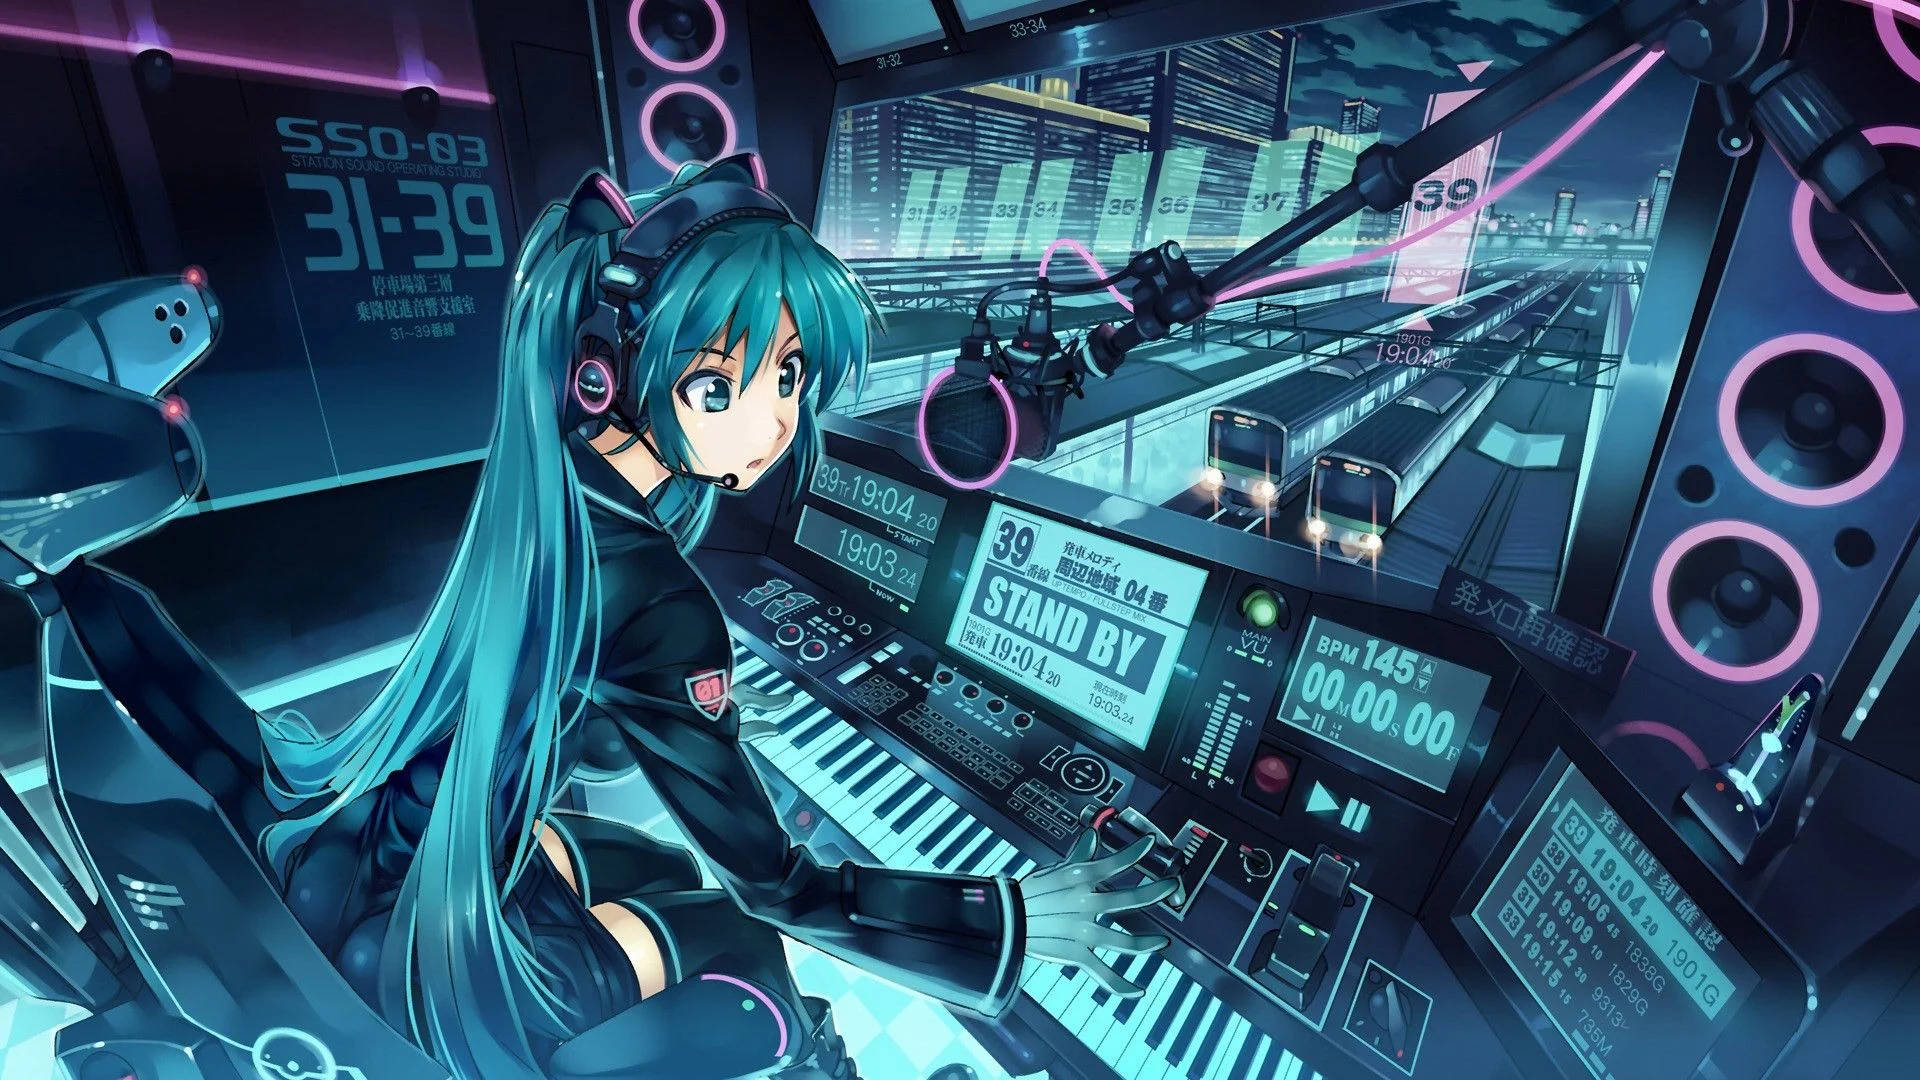 Download Anime Girl With Laptop Music Studio Setup Wallpaper | Wallpapers .com